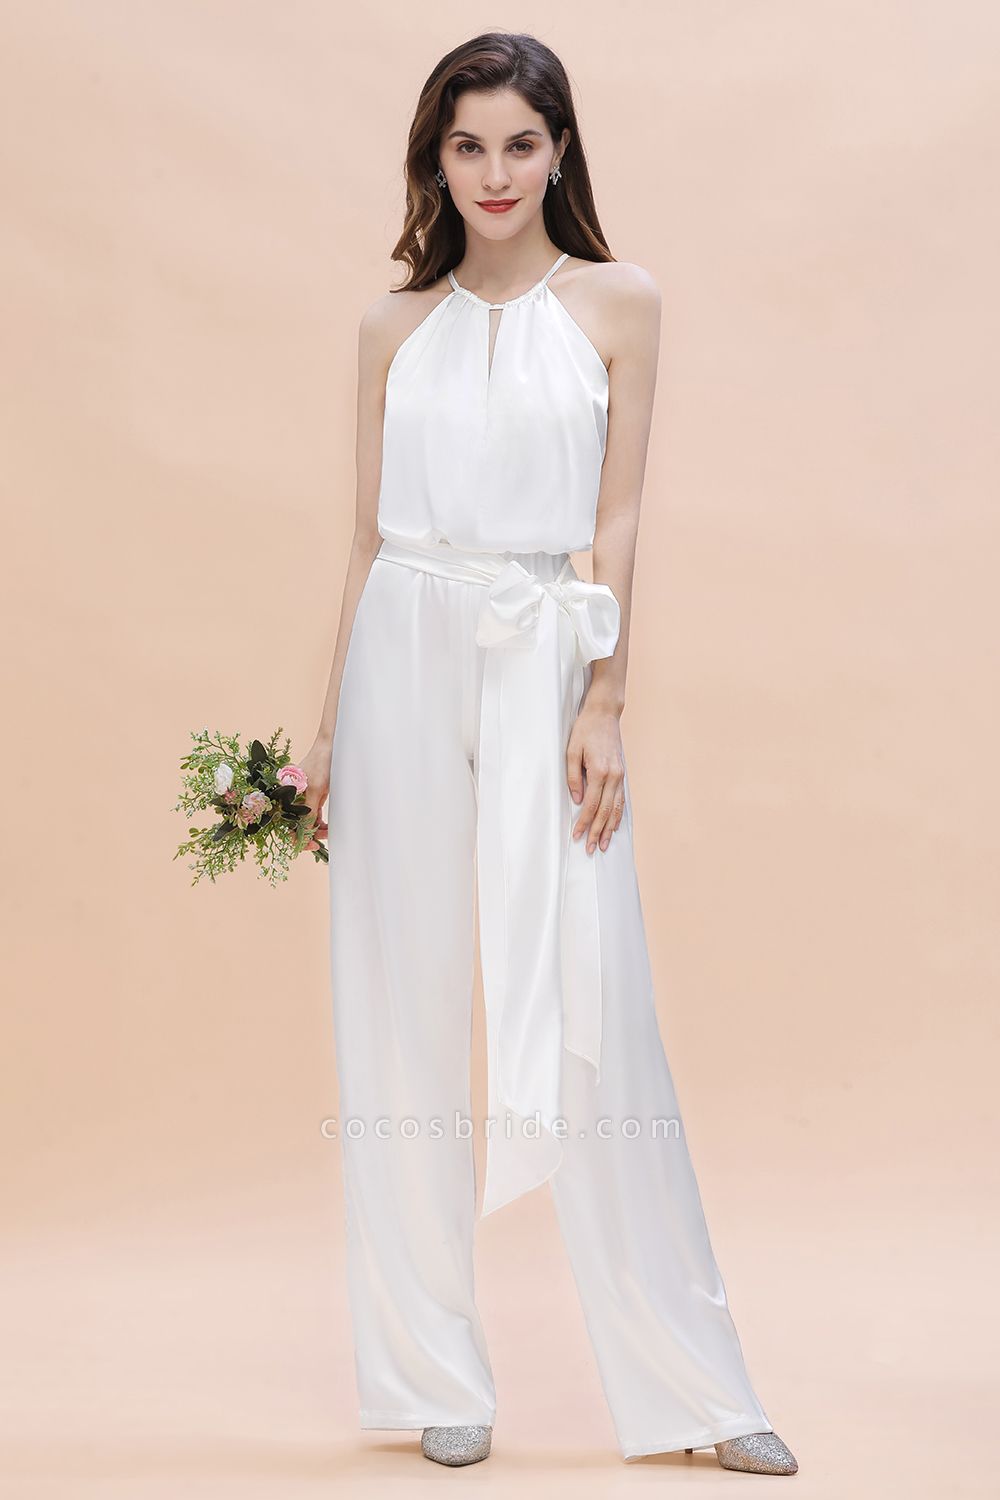 Elegant White Halter Bridesmaid Dress Floor-length Jumpsuit With Bowknot